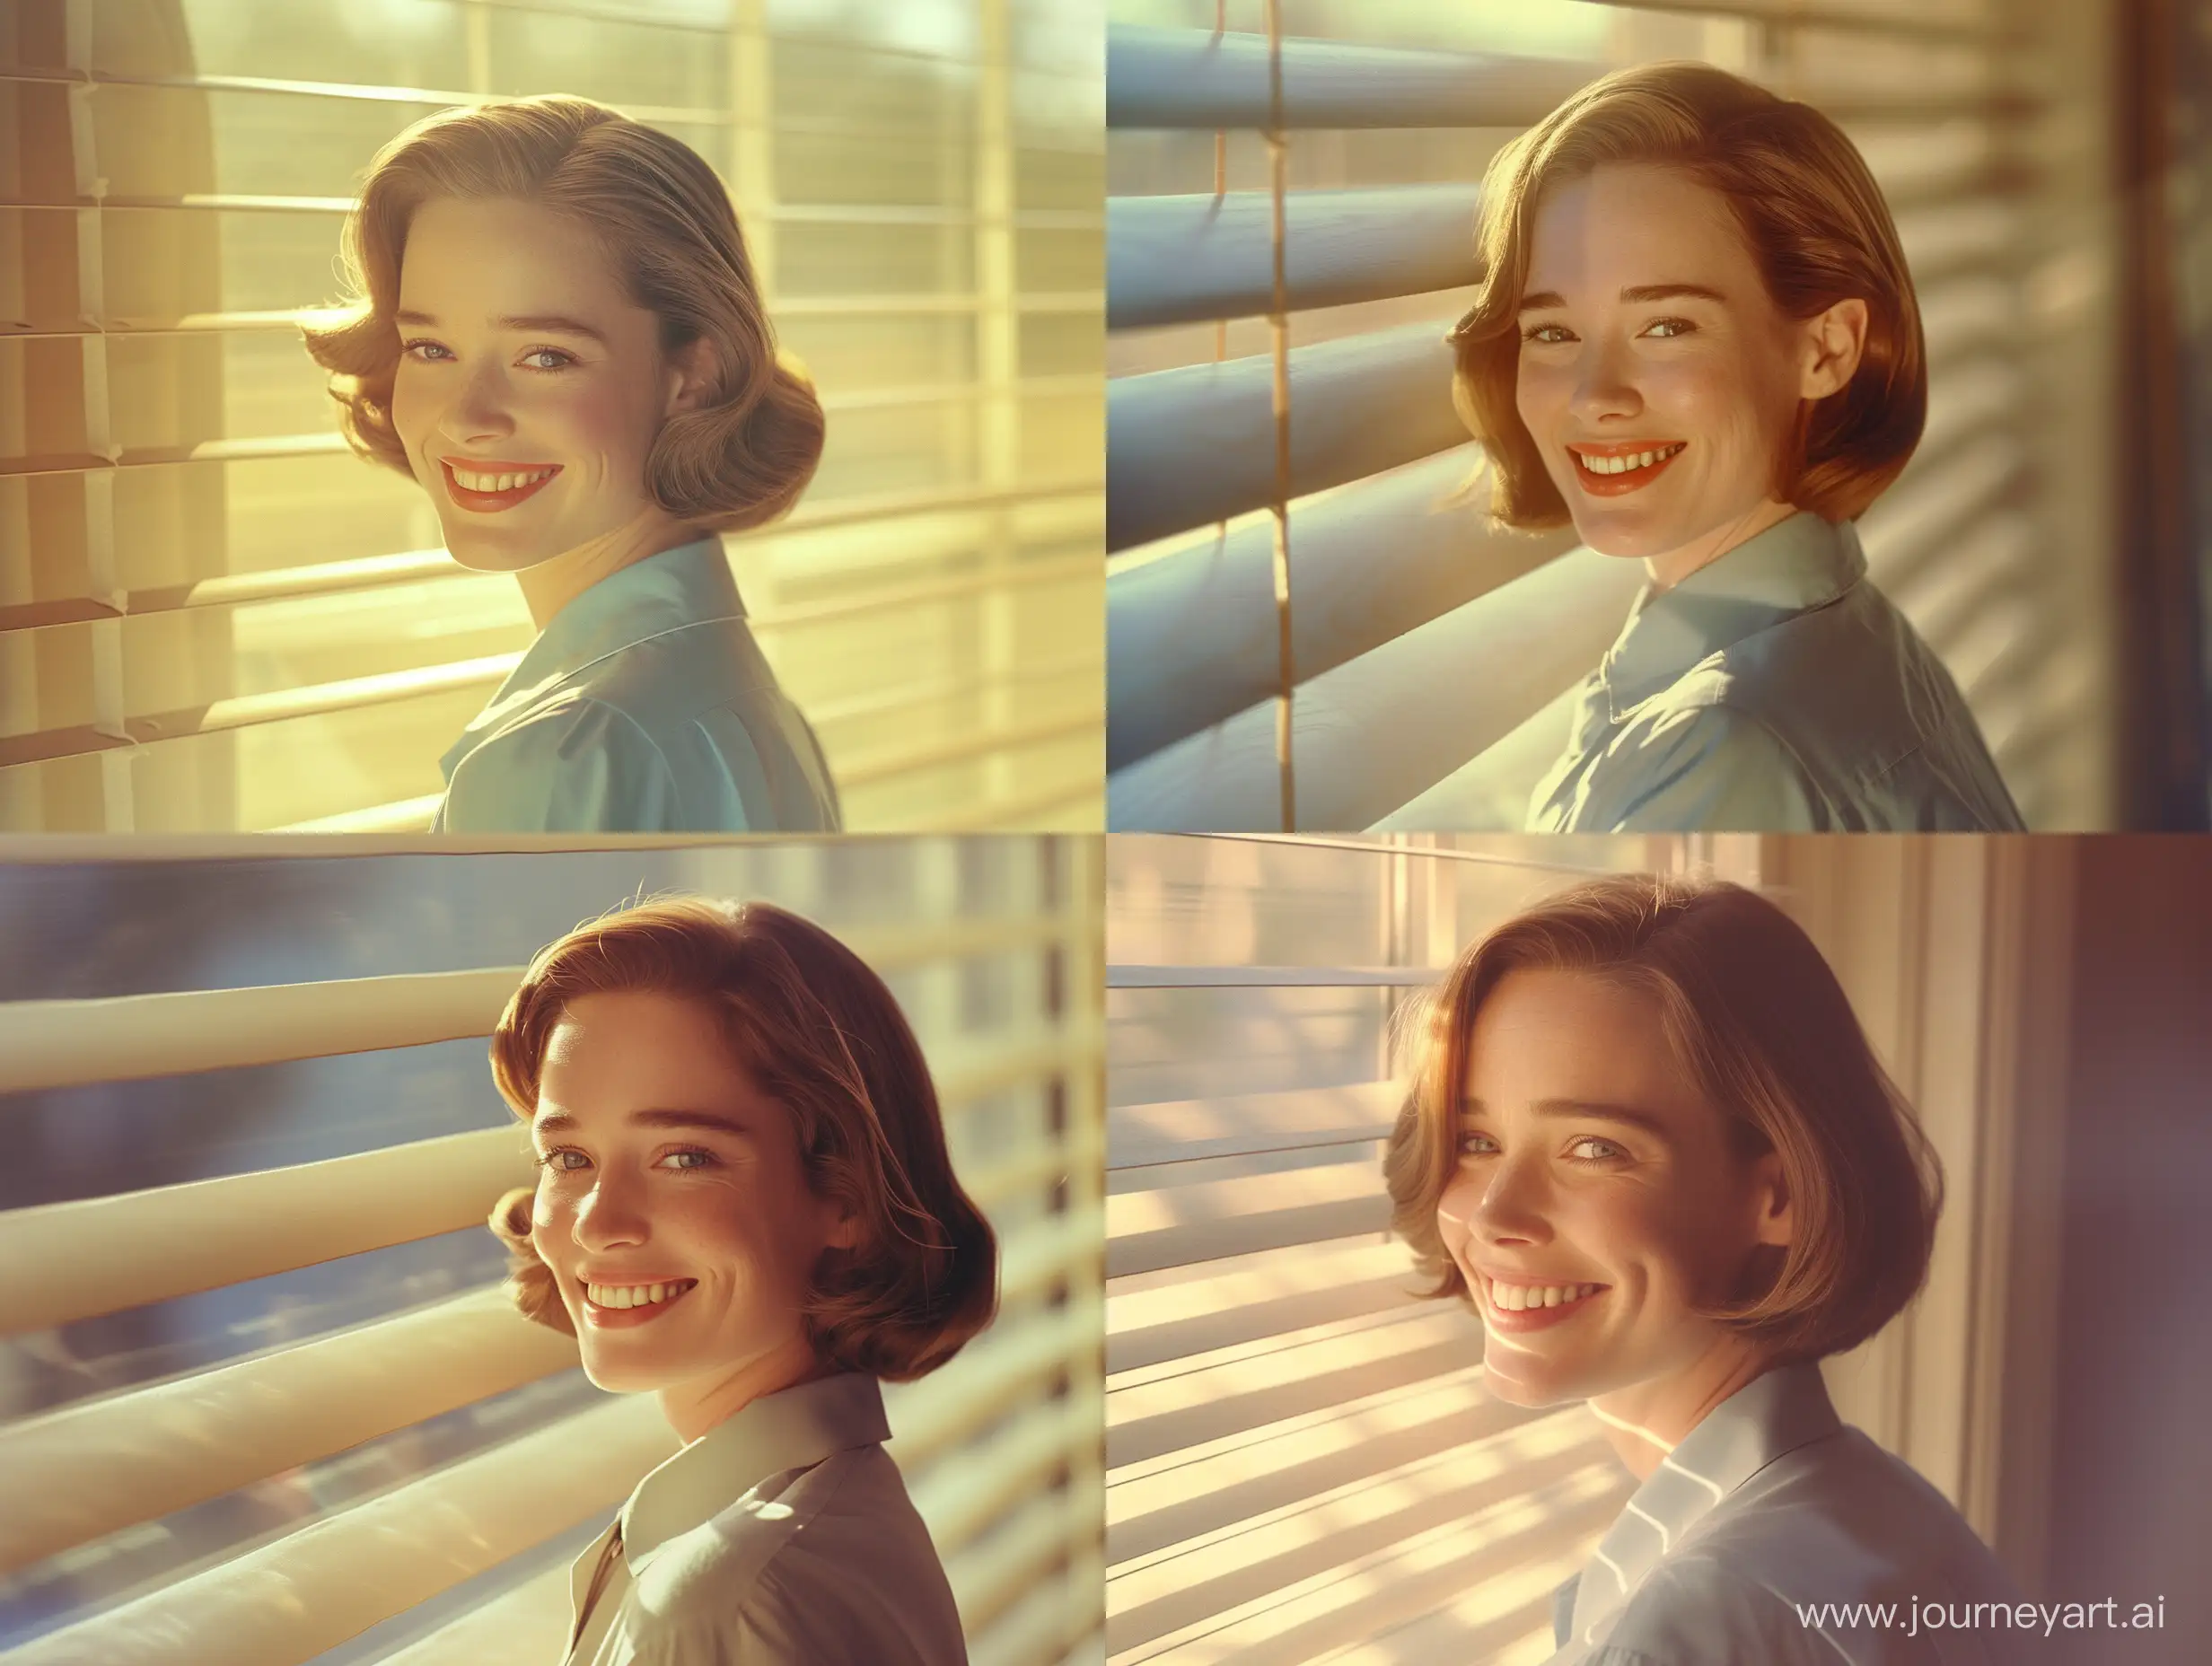 Smiling-1950s-Emily-Blunt-AwardWinning-Portrait-in-Analog-Film-Style